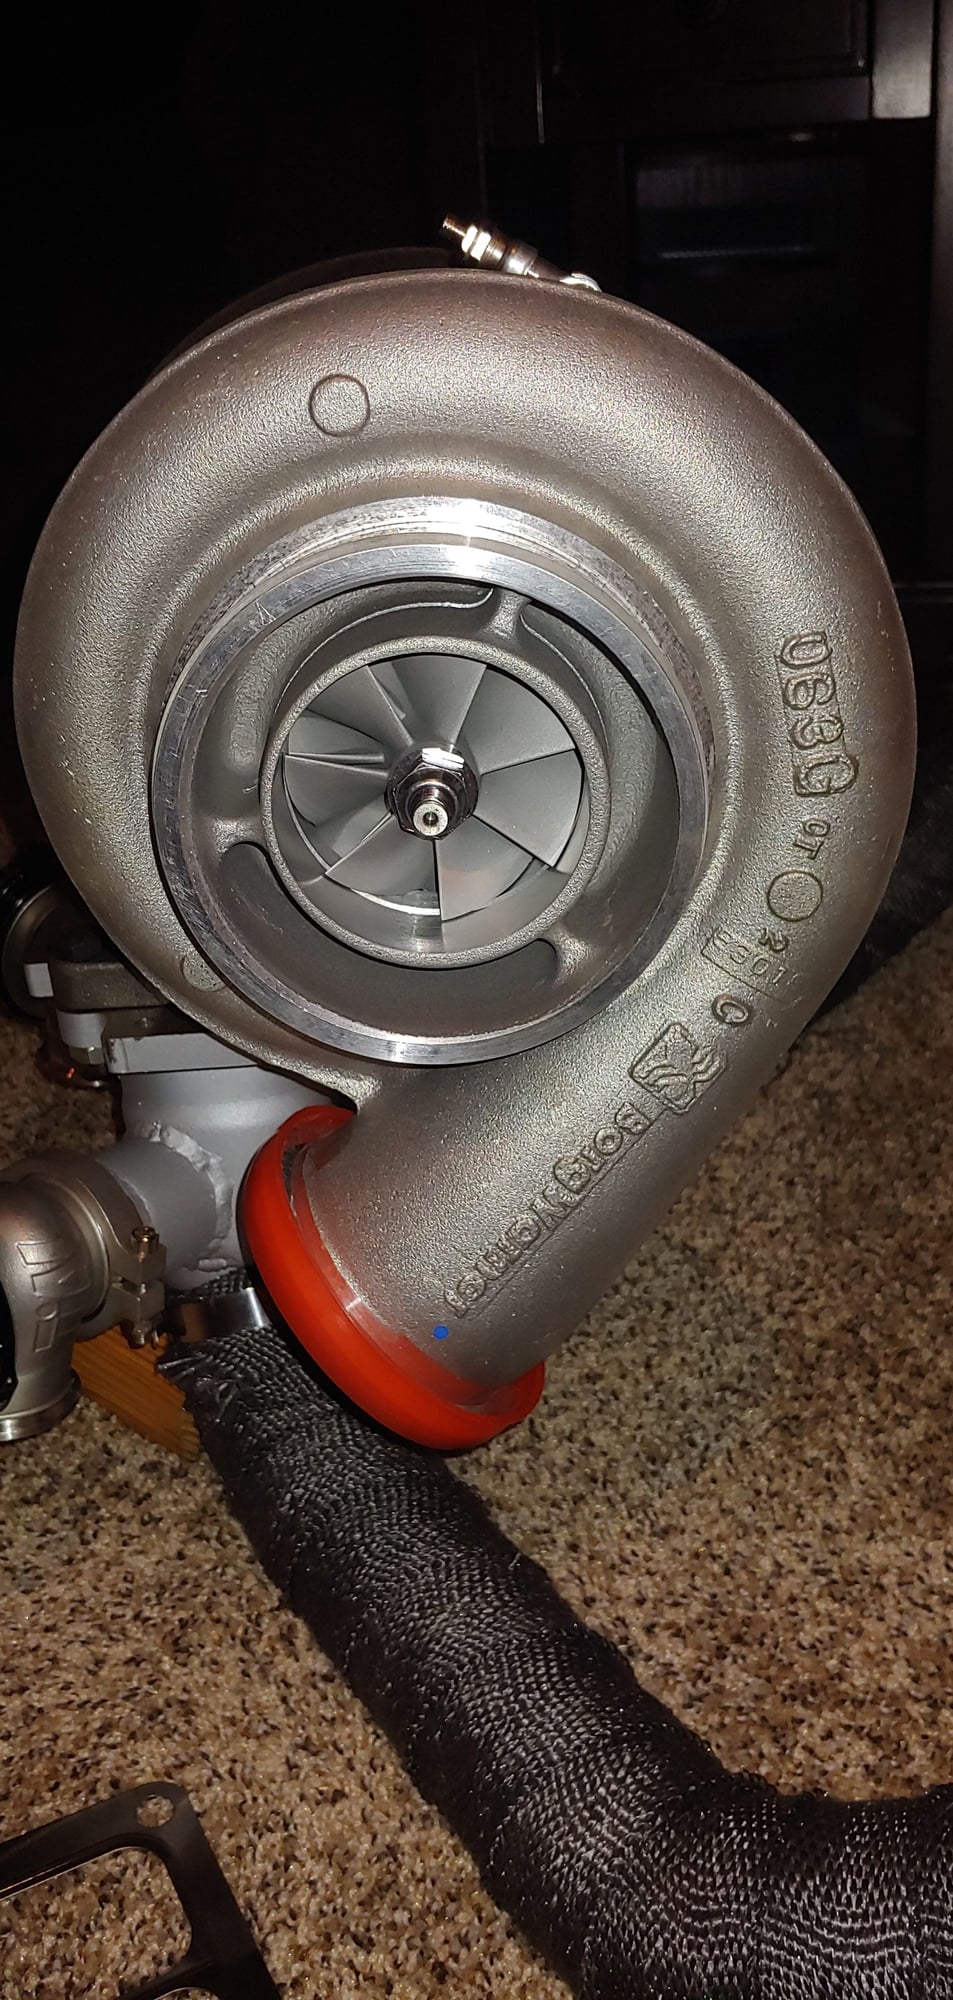  - LS1 Turbo Hot Side Manifold - Elizabeth, IN 47117, United States